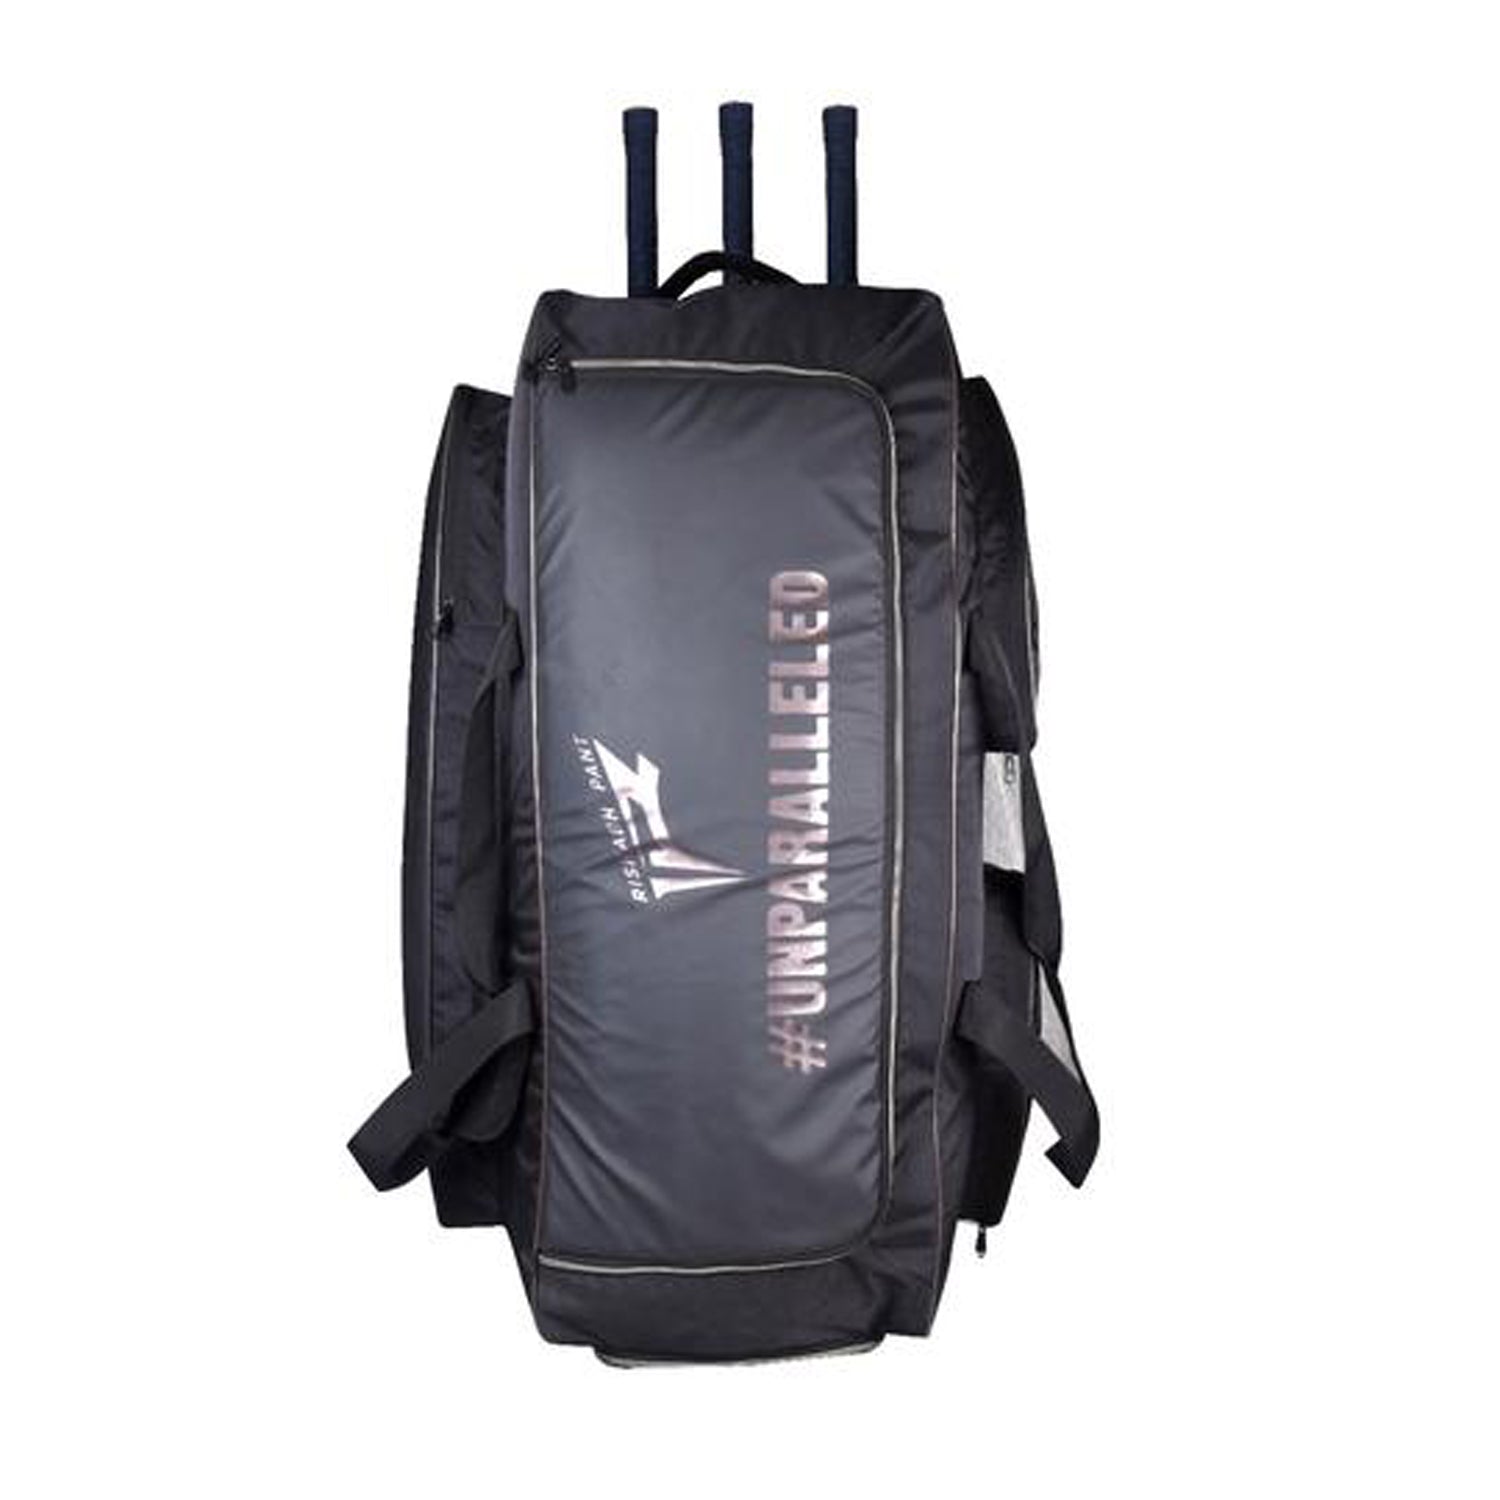 SG Duffle RP Premium Cricket Kit Bag - Best Price online Prokicksports.com